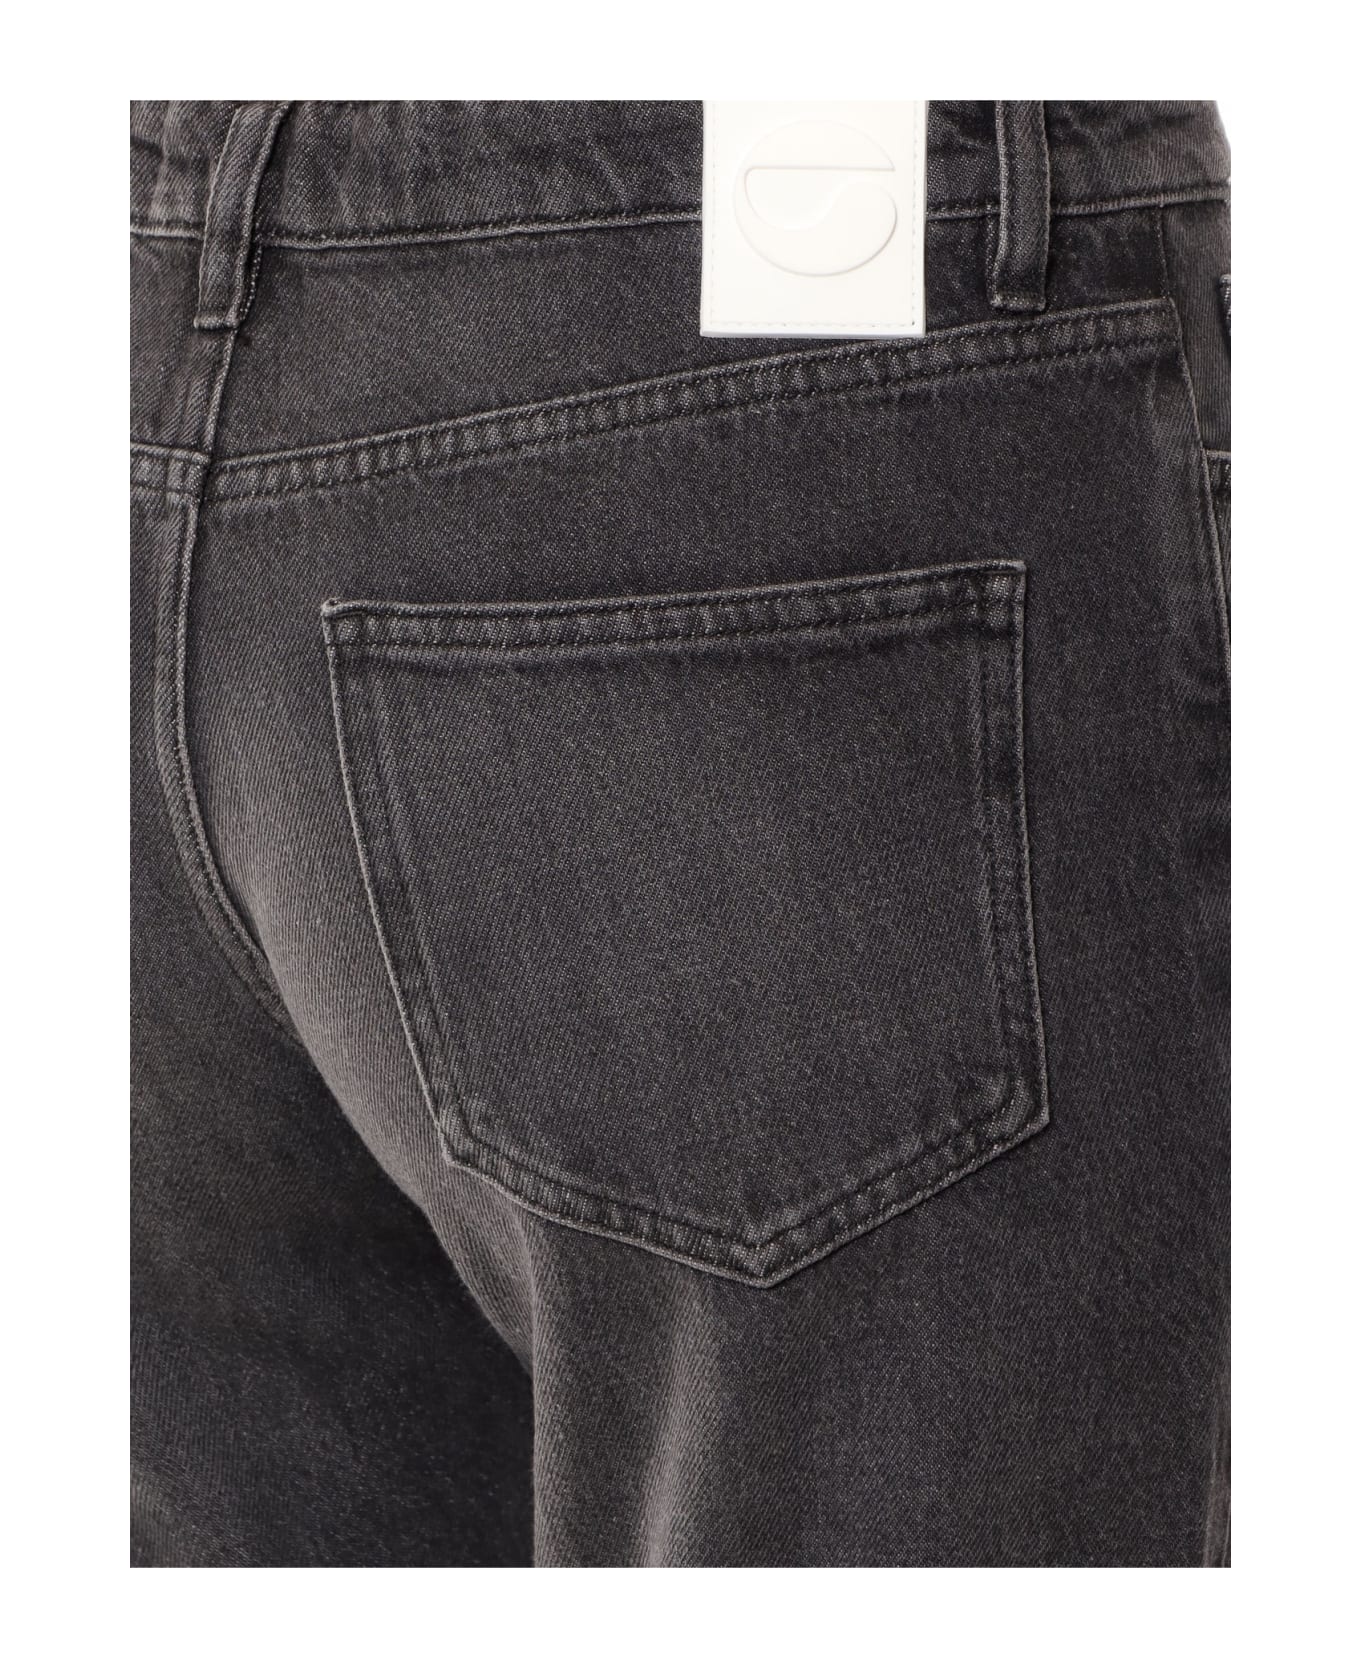 Coperni Trouser Pants - WASHED BLACK